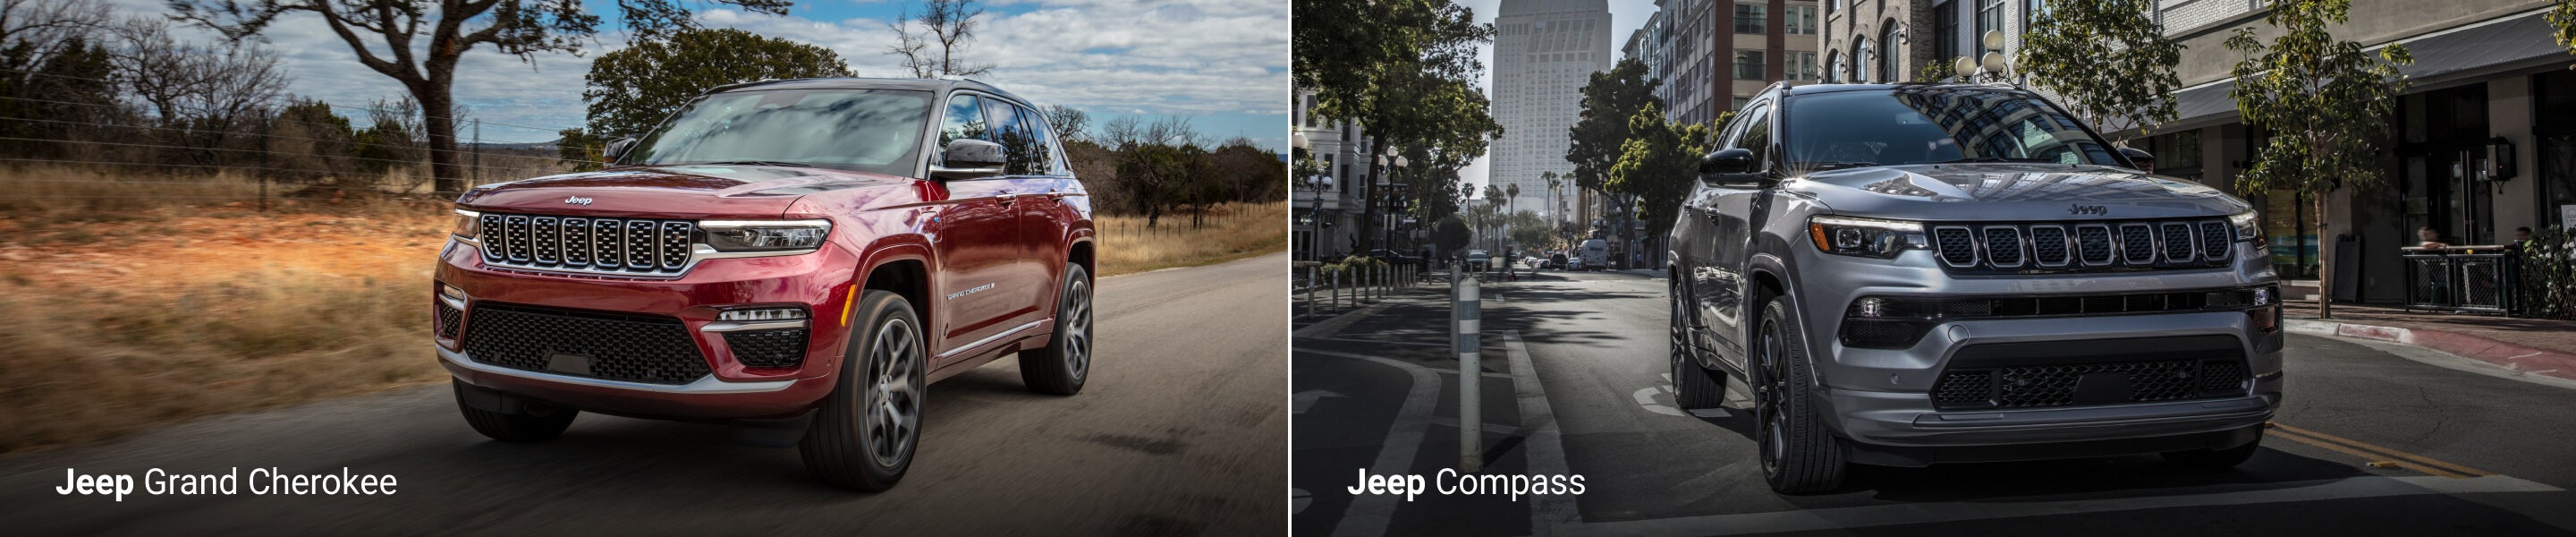 Jeep Compass vs Jeep Grand Cherokee